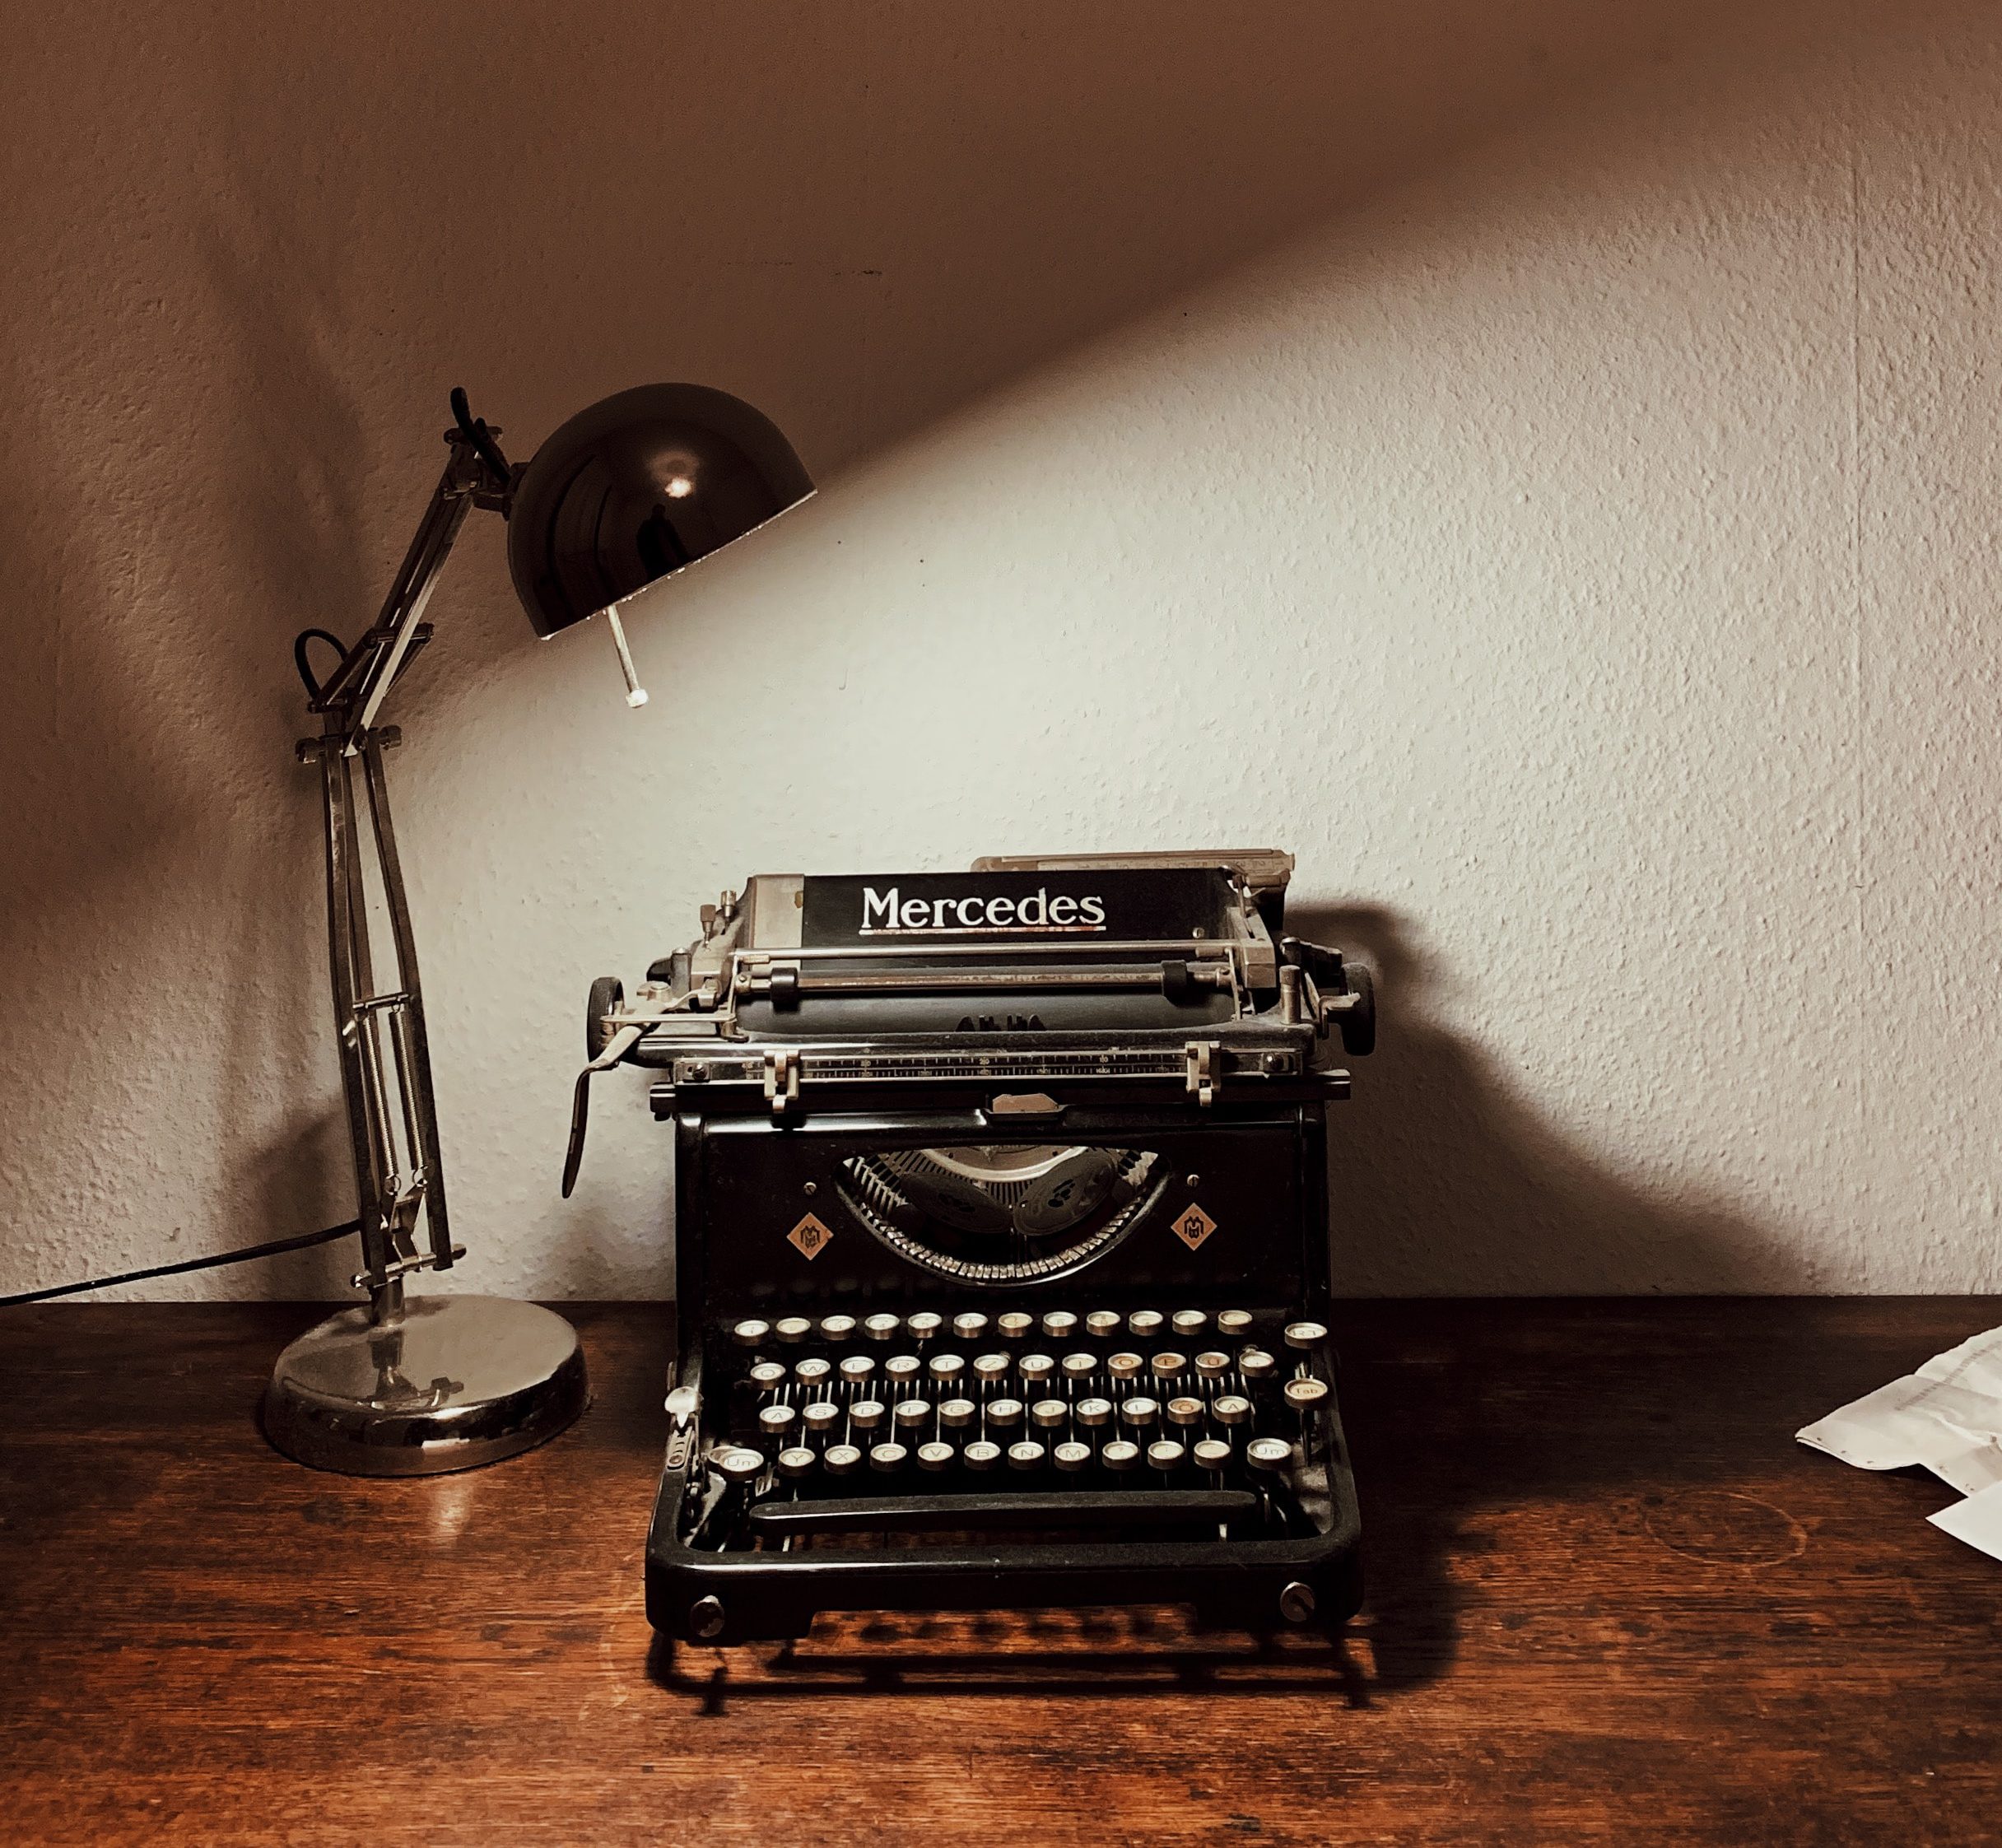 Typewriter with a lamp Courtesy of Unsplash by Yusuf Evli